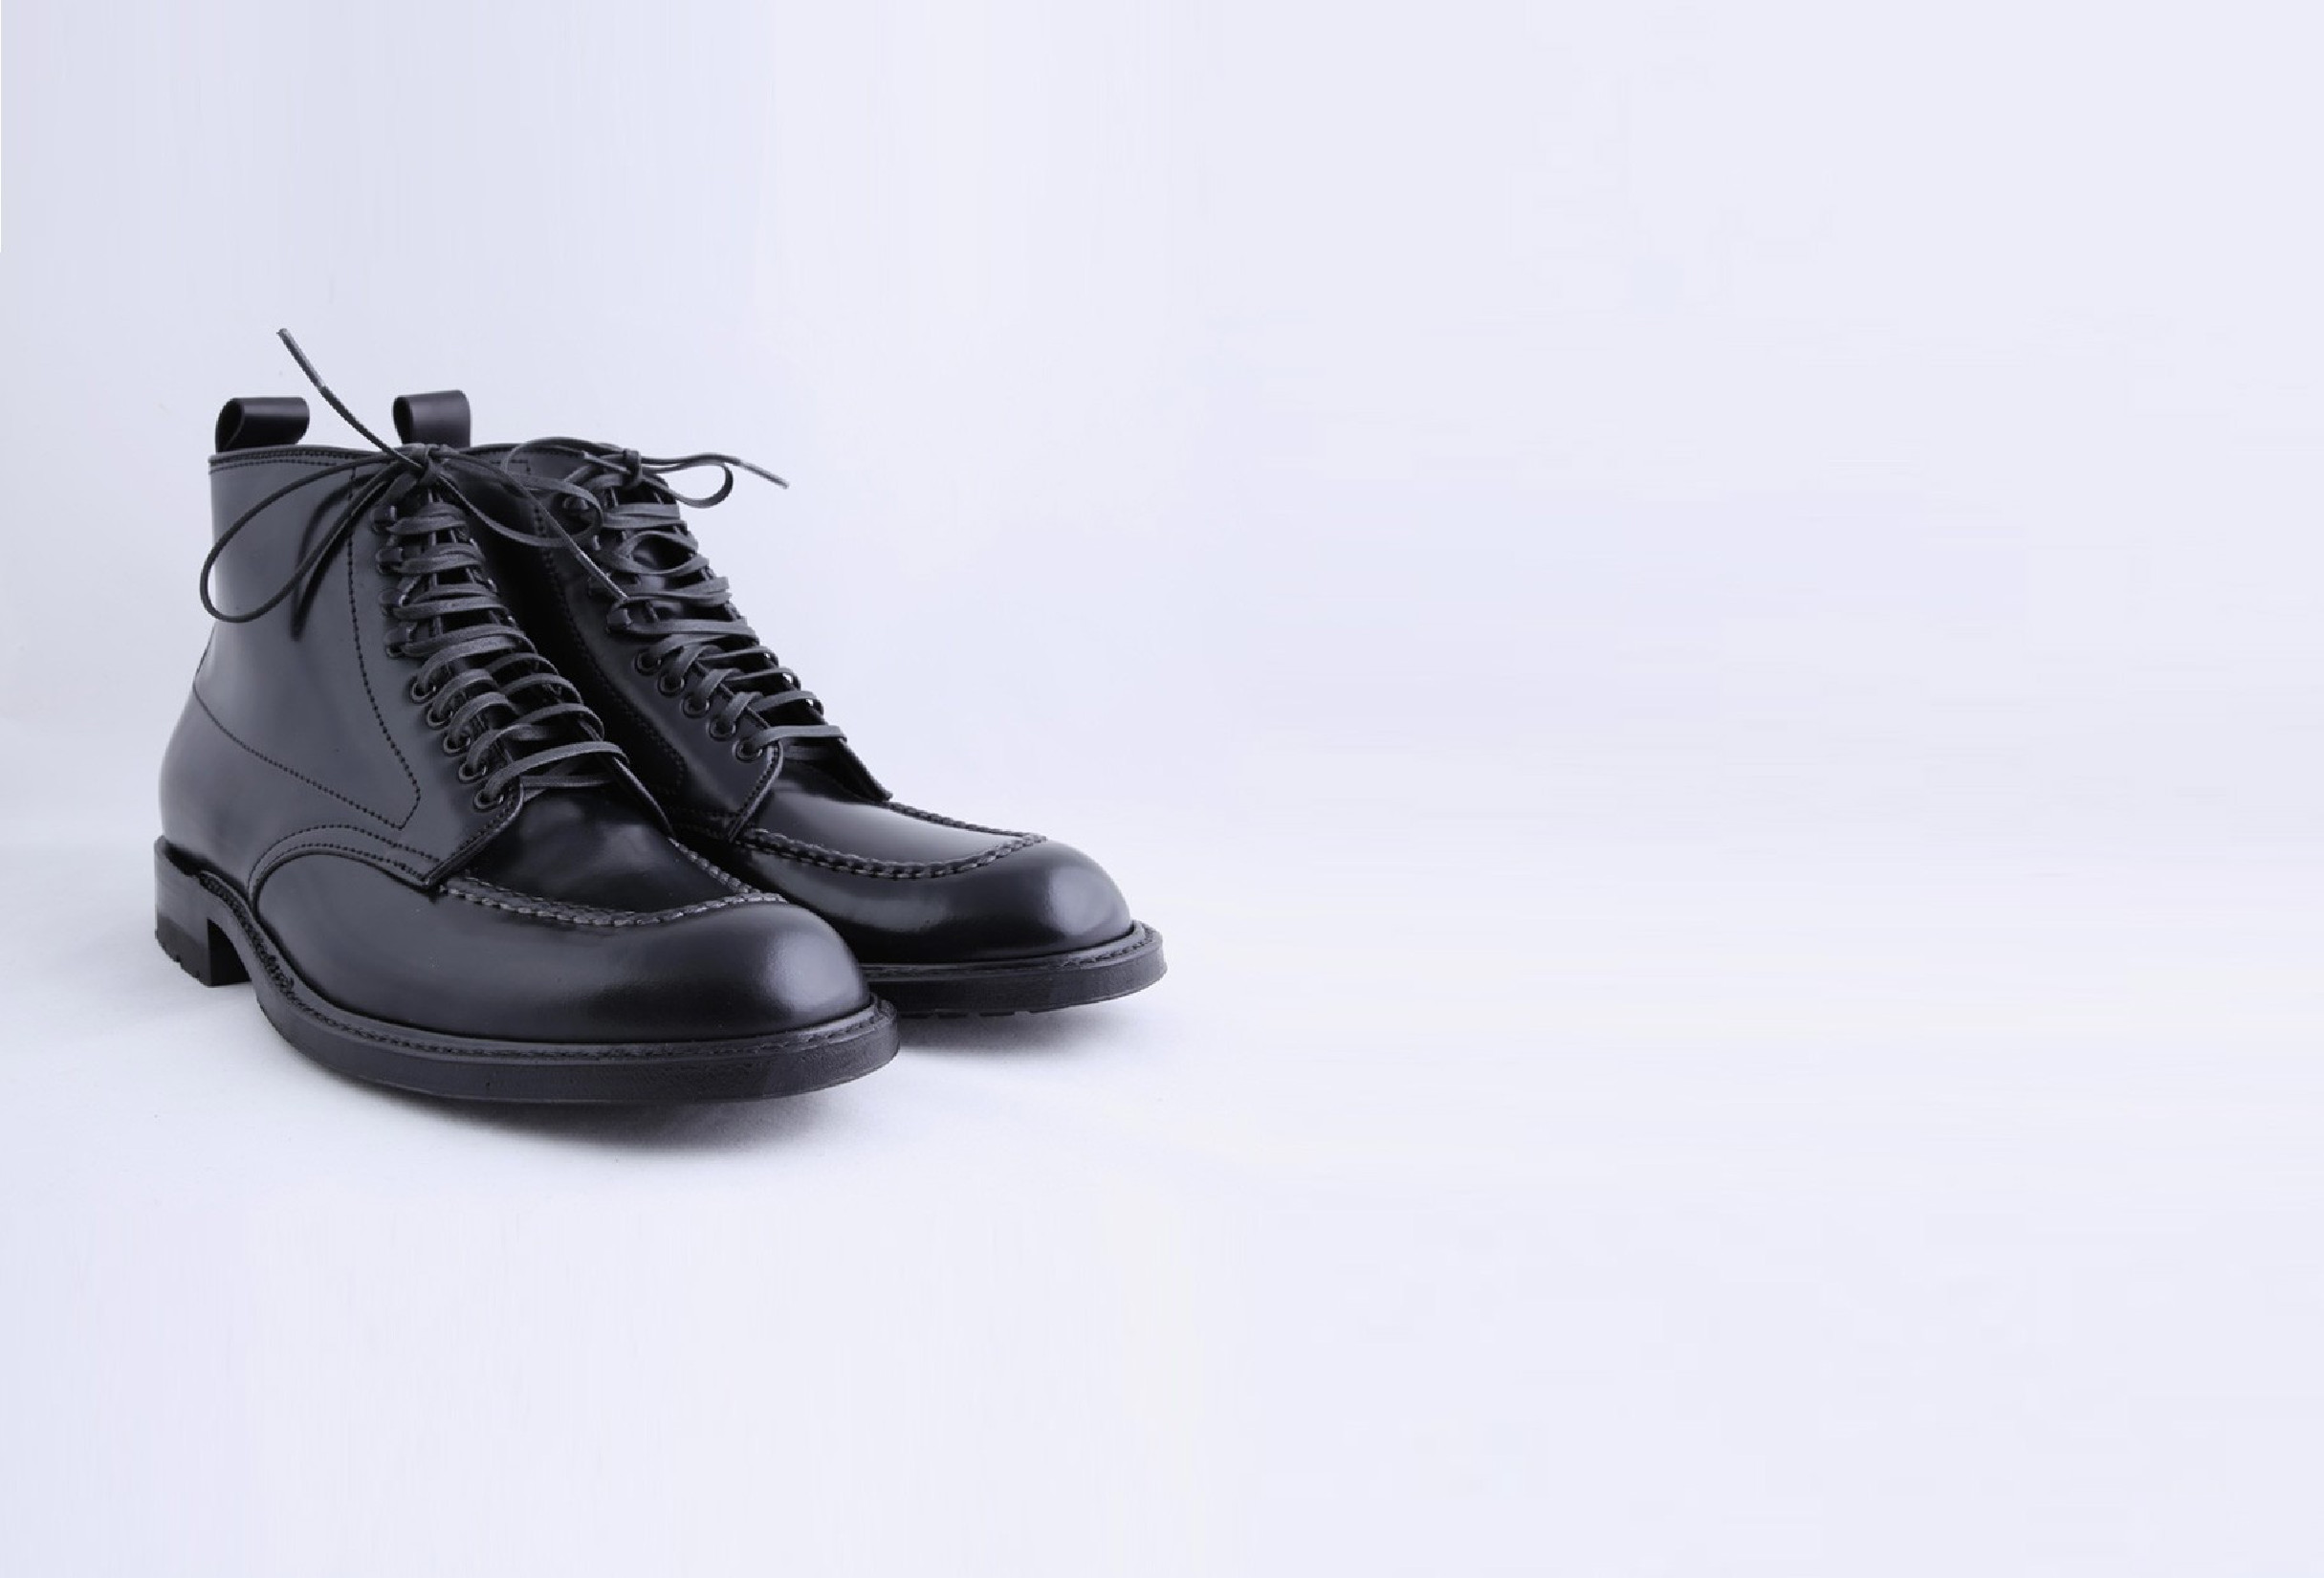 40509hc indy boots cordovan Black